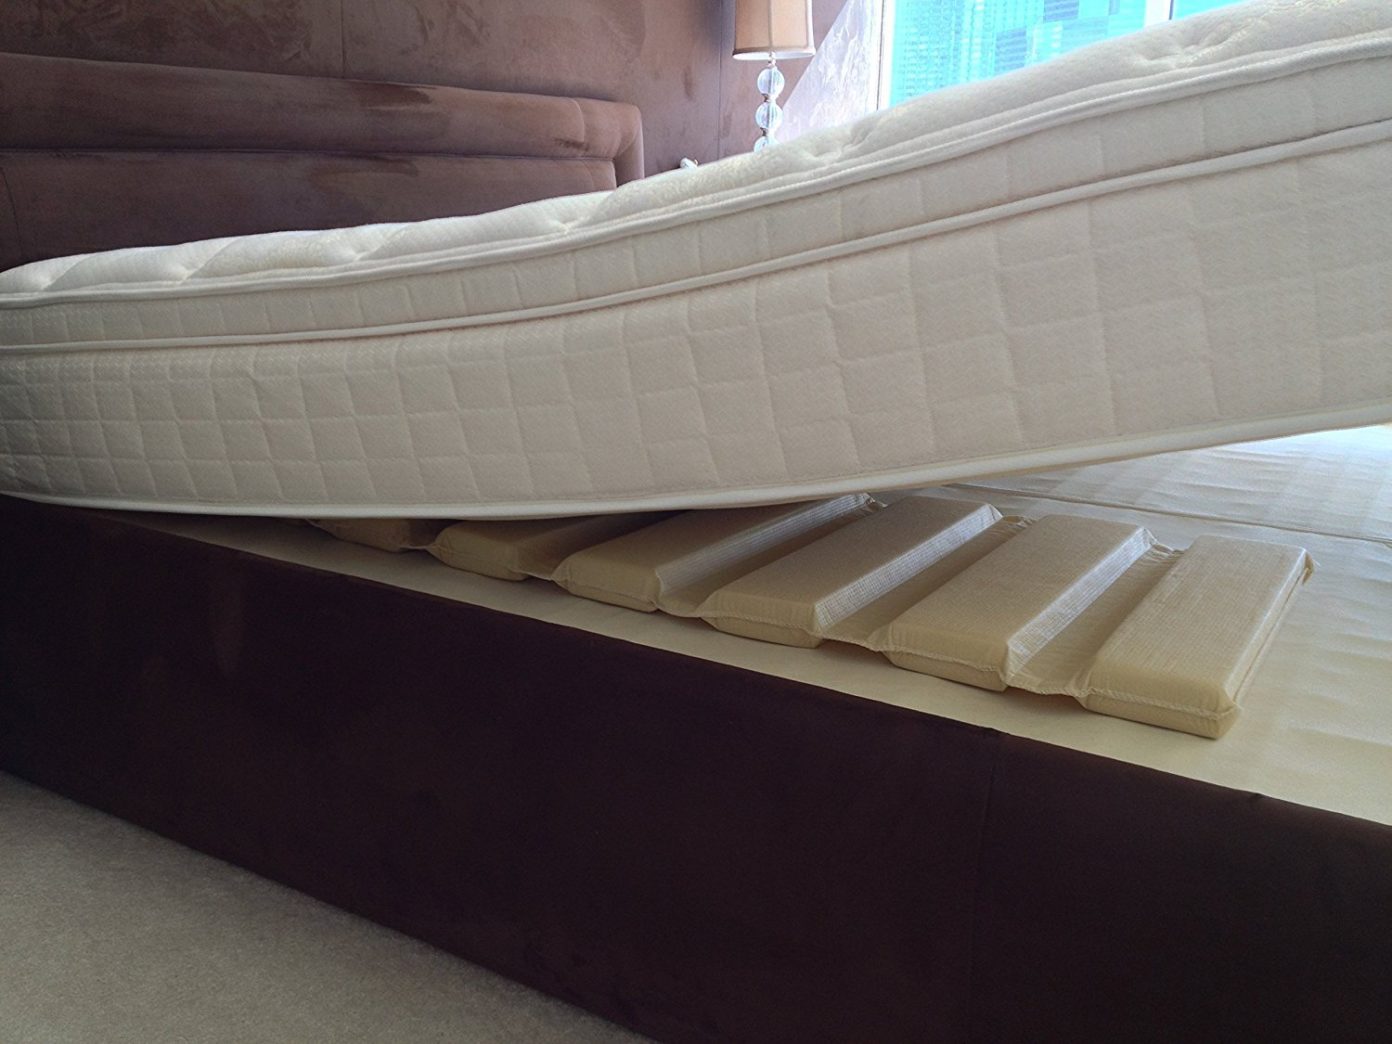 under mattress insert to raise bedding off feet